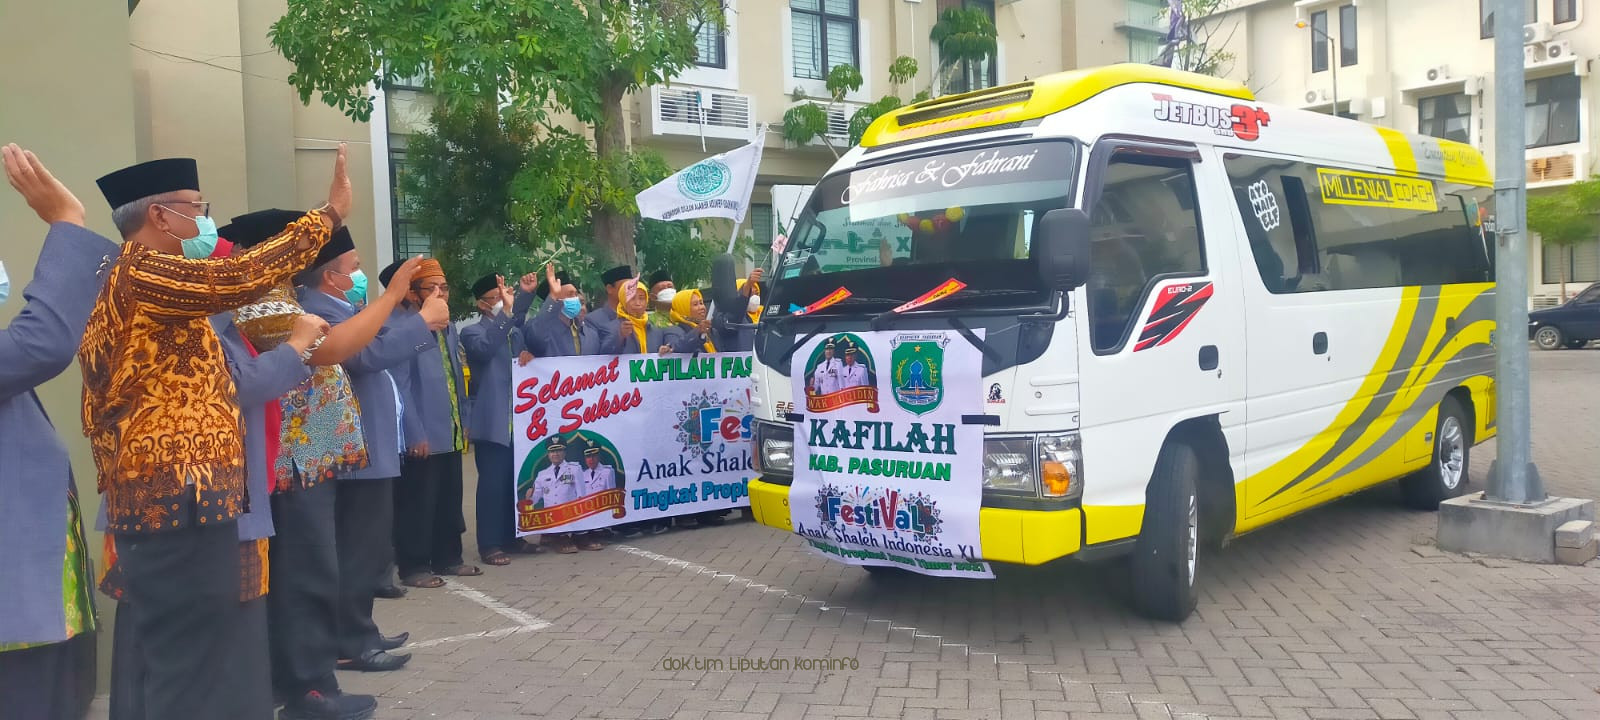 Target Juara, 33 Kafilah Kabupaten Pasuruan Ikuti Festival Anak Sholeh Jawa Timur ke XI